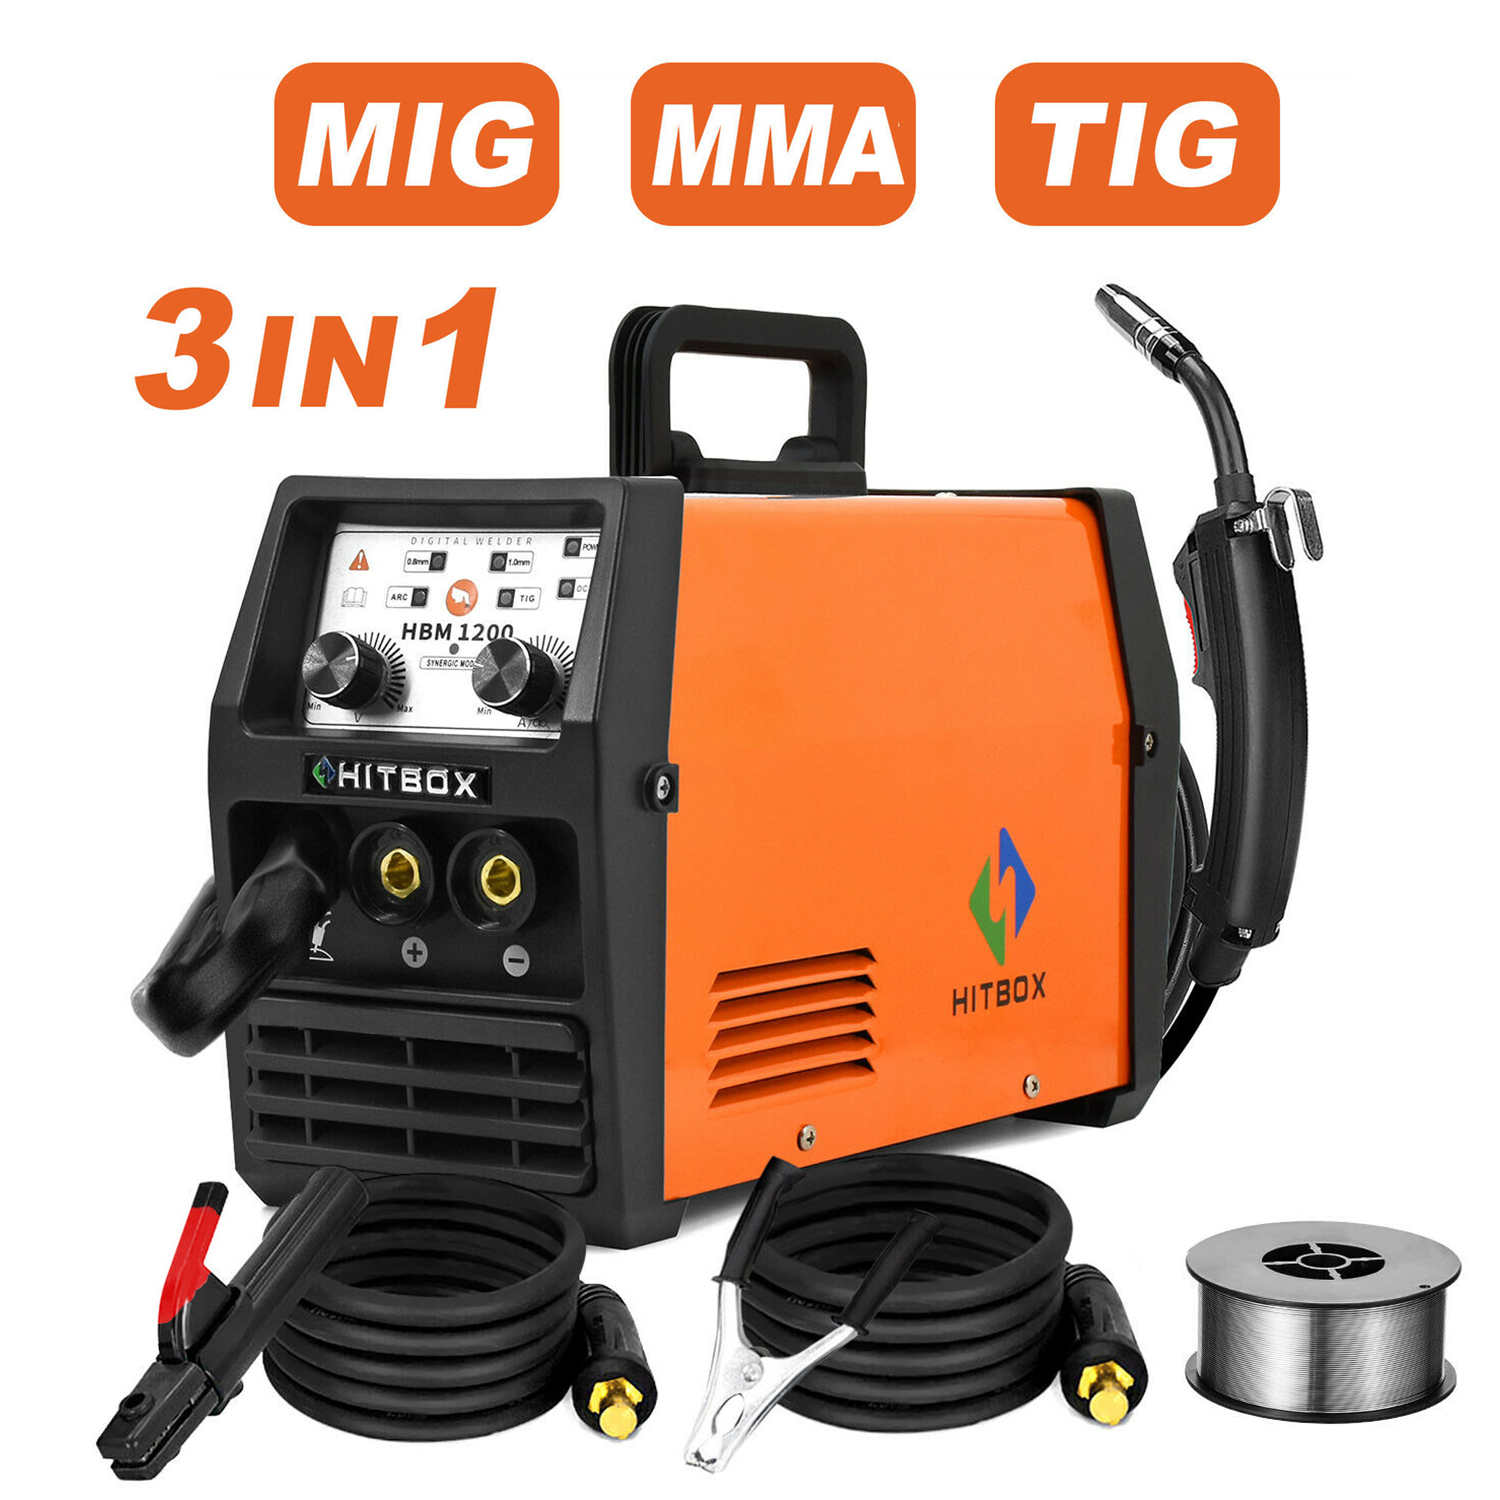 HITBOX Mig Welder Semi-Automatic 220V Inverter Tig Argon Arc Mma Gas-Less MAG Welders 3 in 1 Synergy HBM1200 Welding Machine